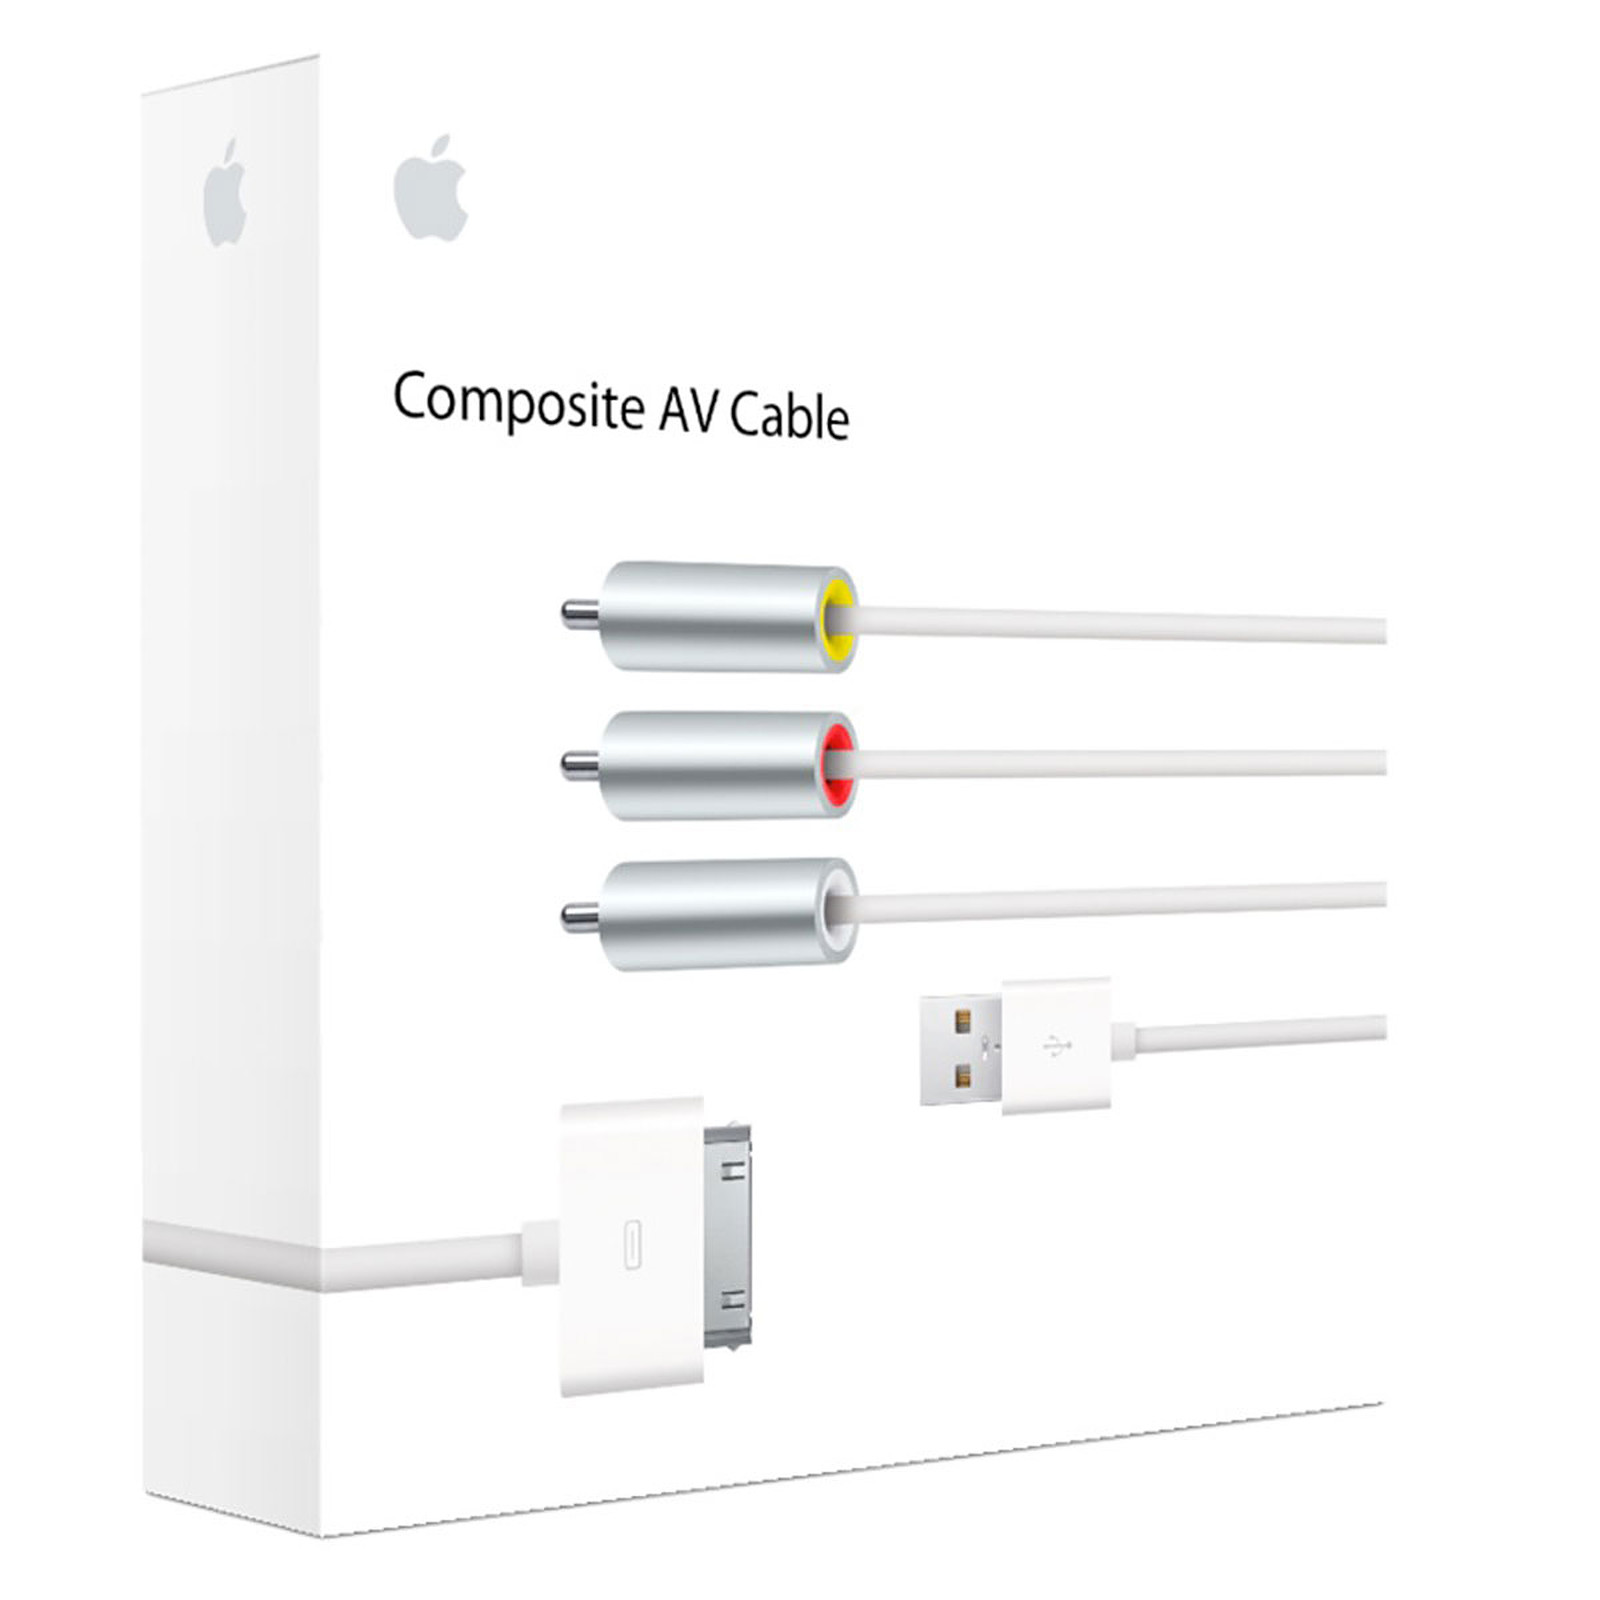 Apple Cable composite AV - Accessoires Apple Apple